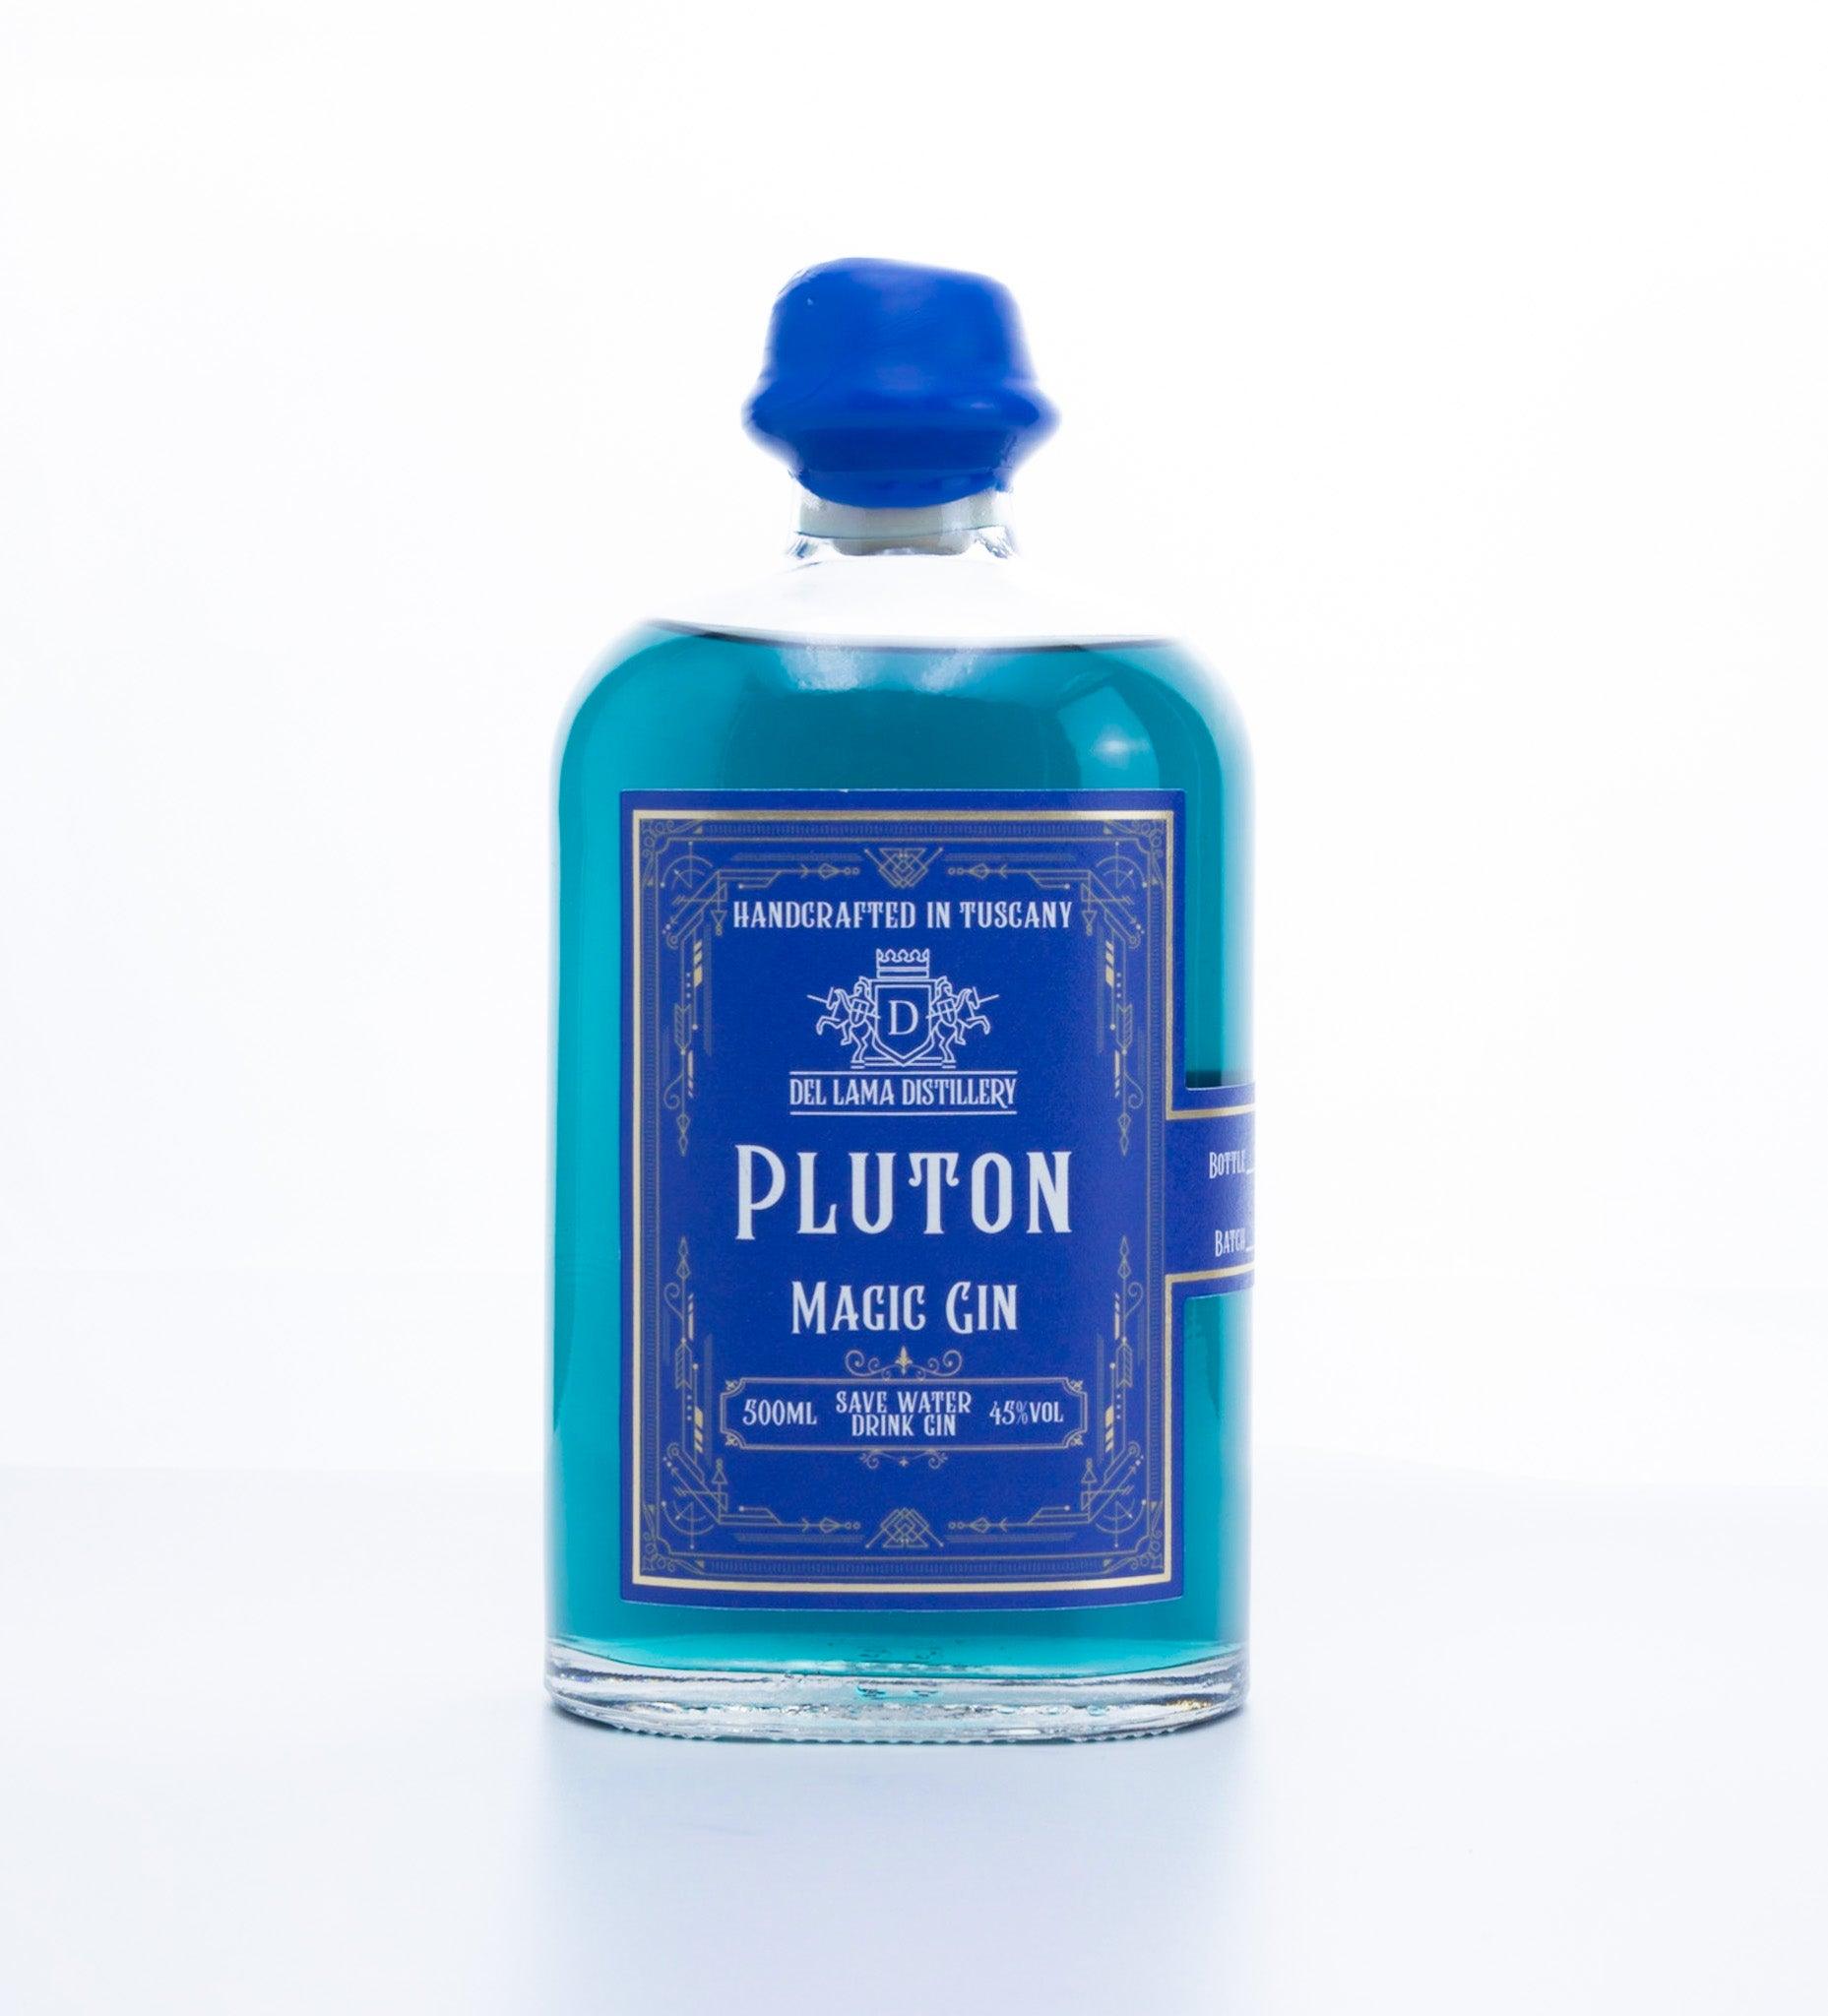 Pluton - Magic Gin - Del Lama Distillery